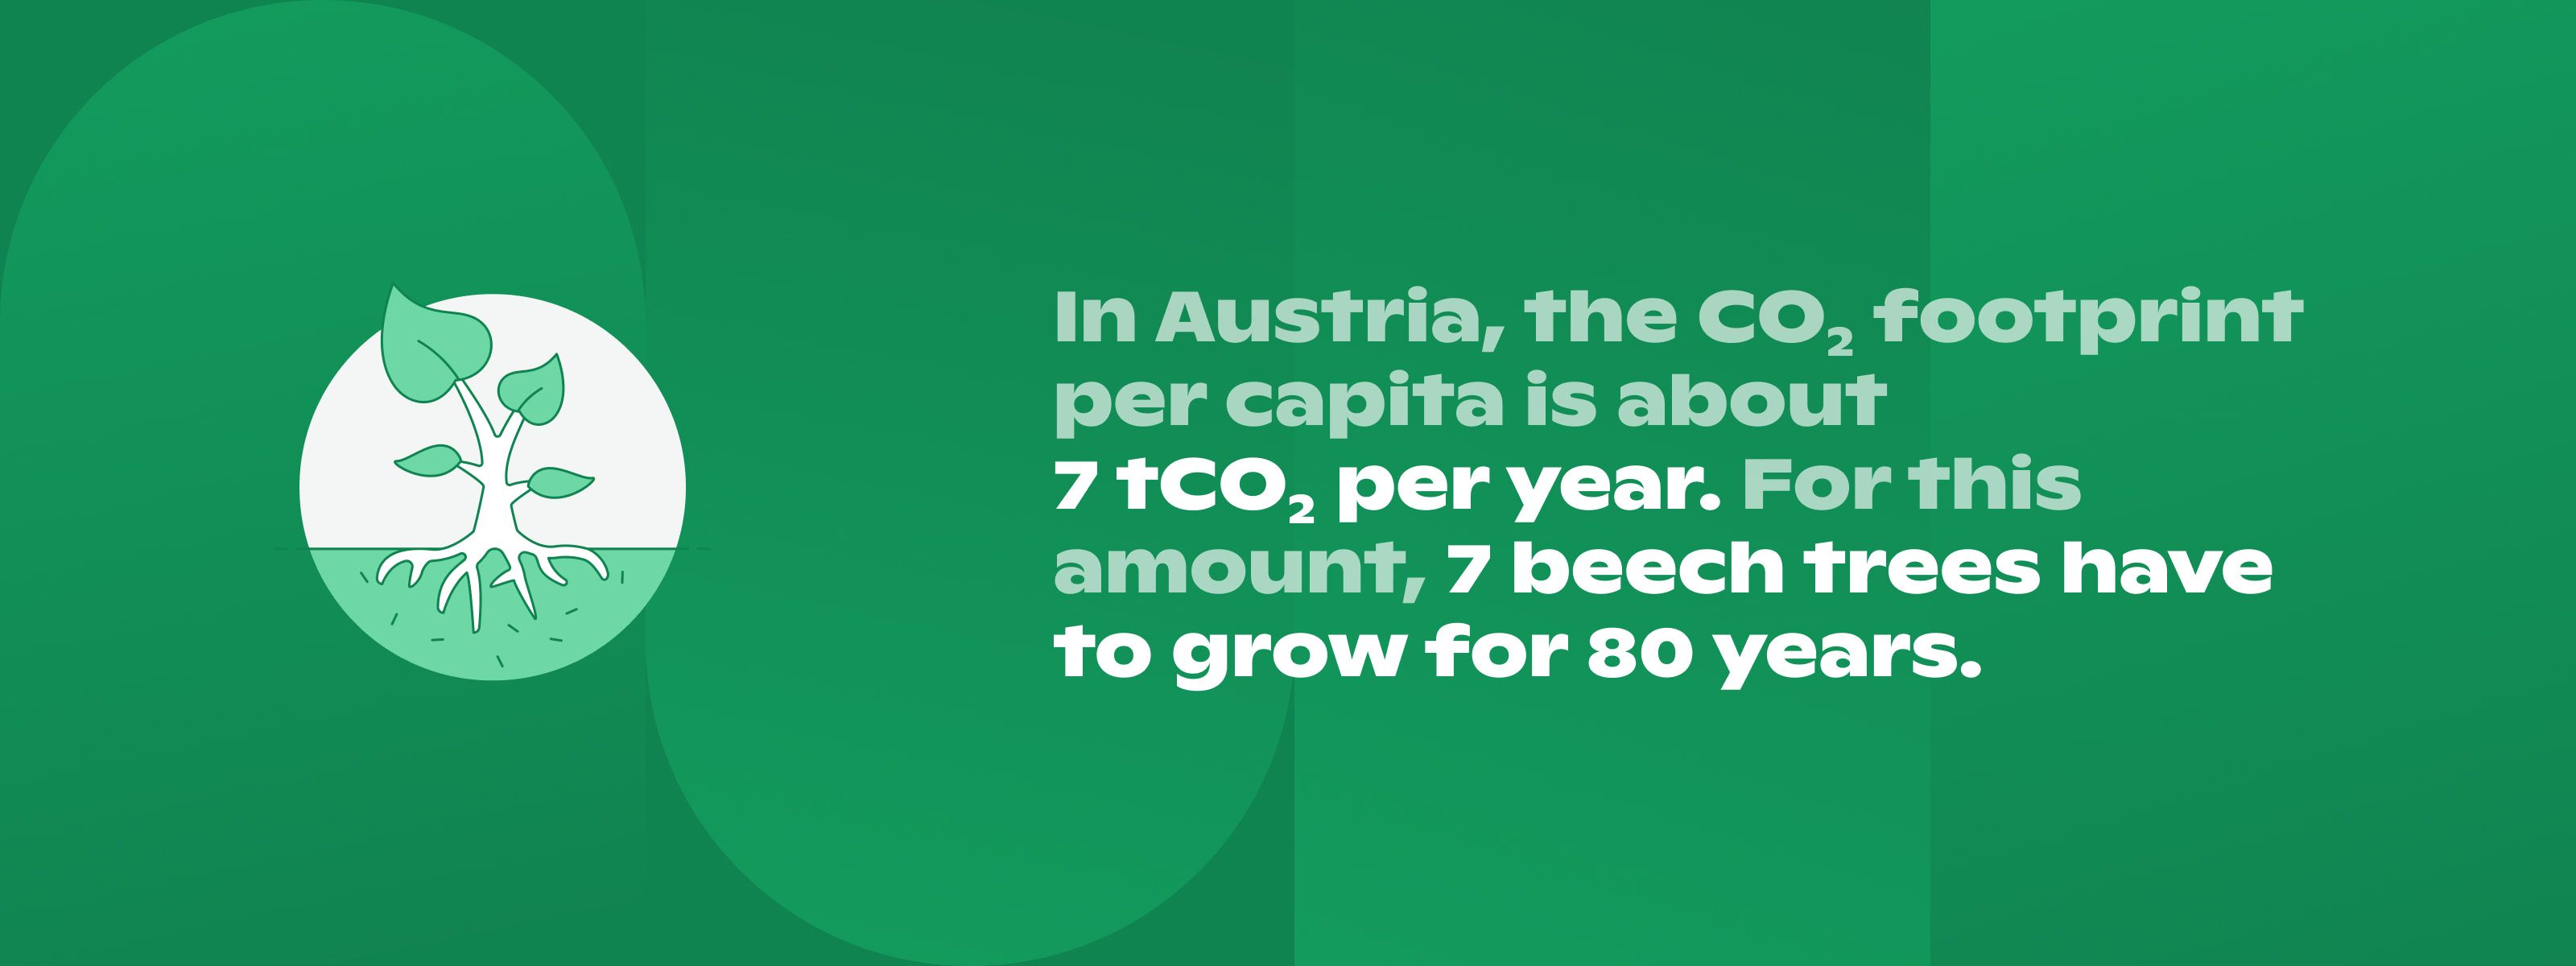 CO2_Footprint_Austria@2x.jpg